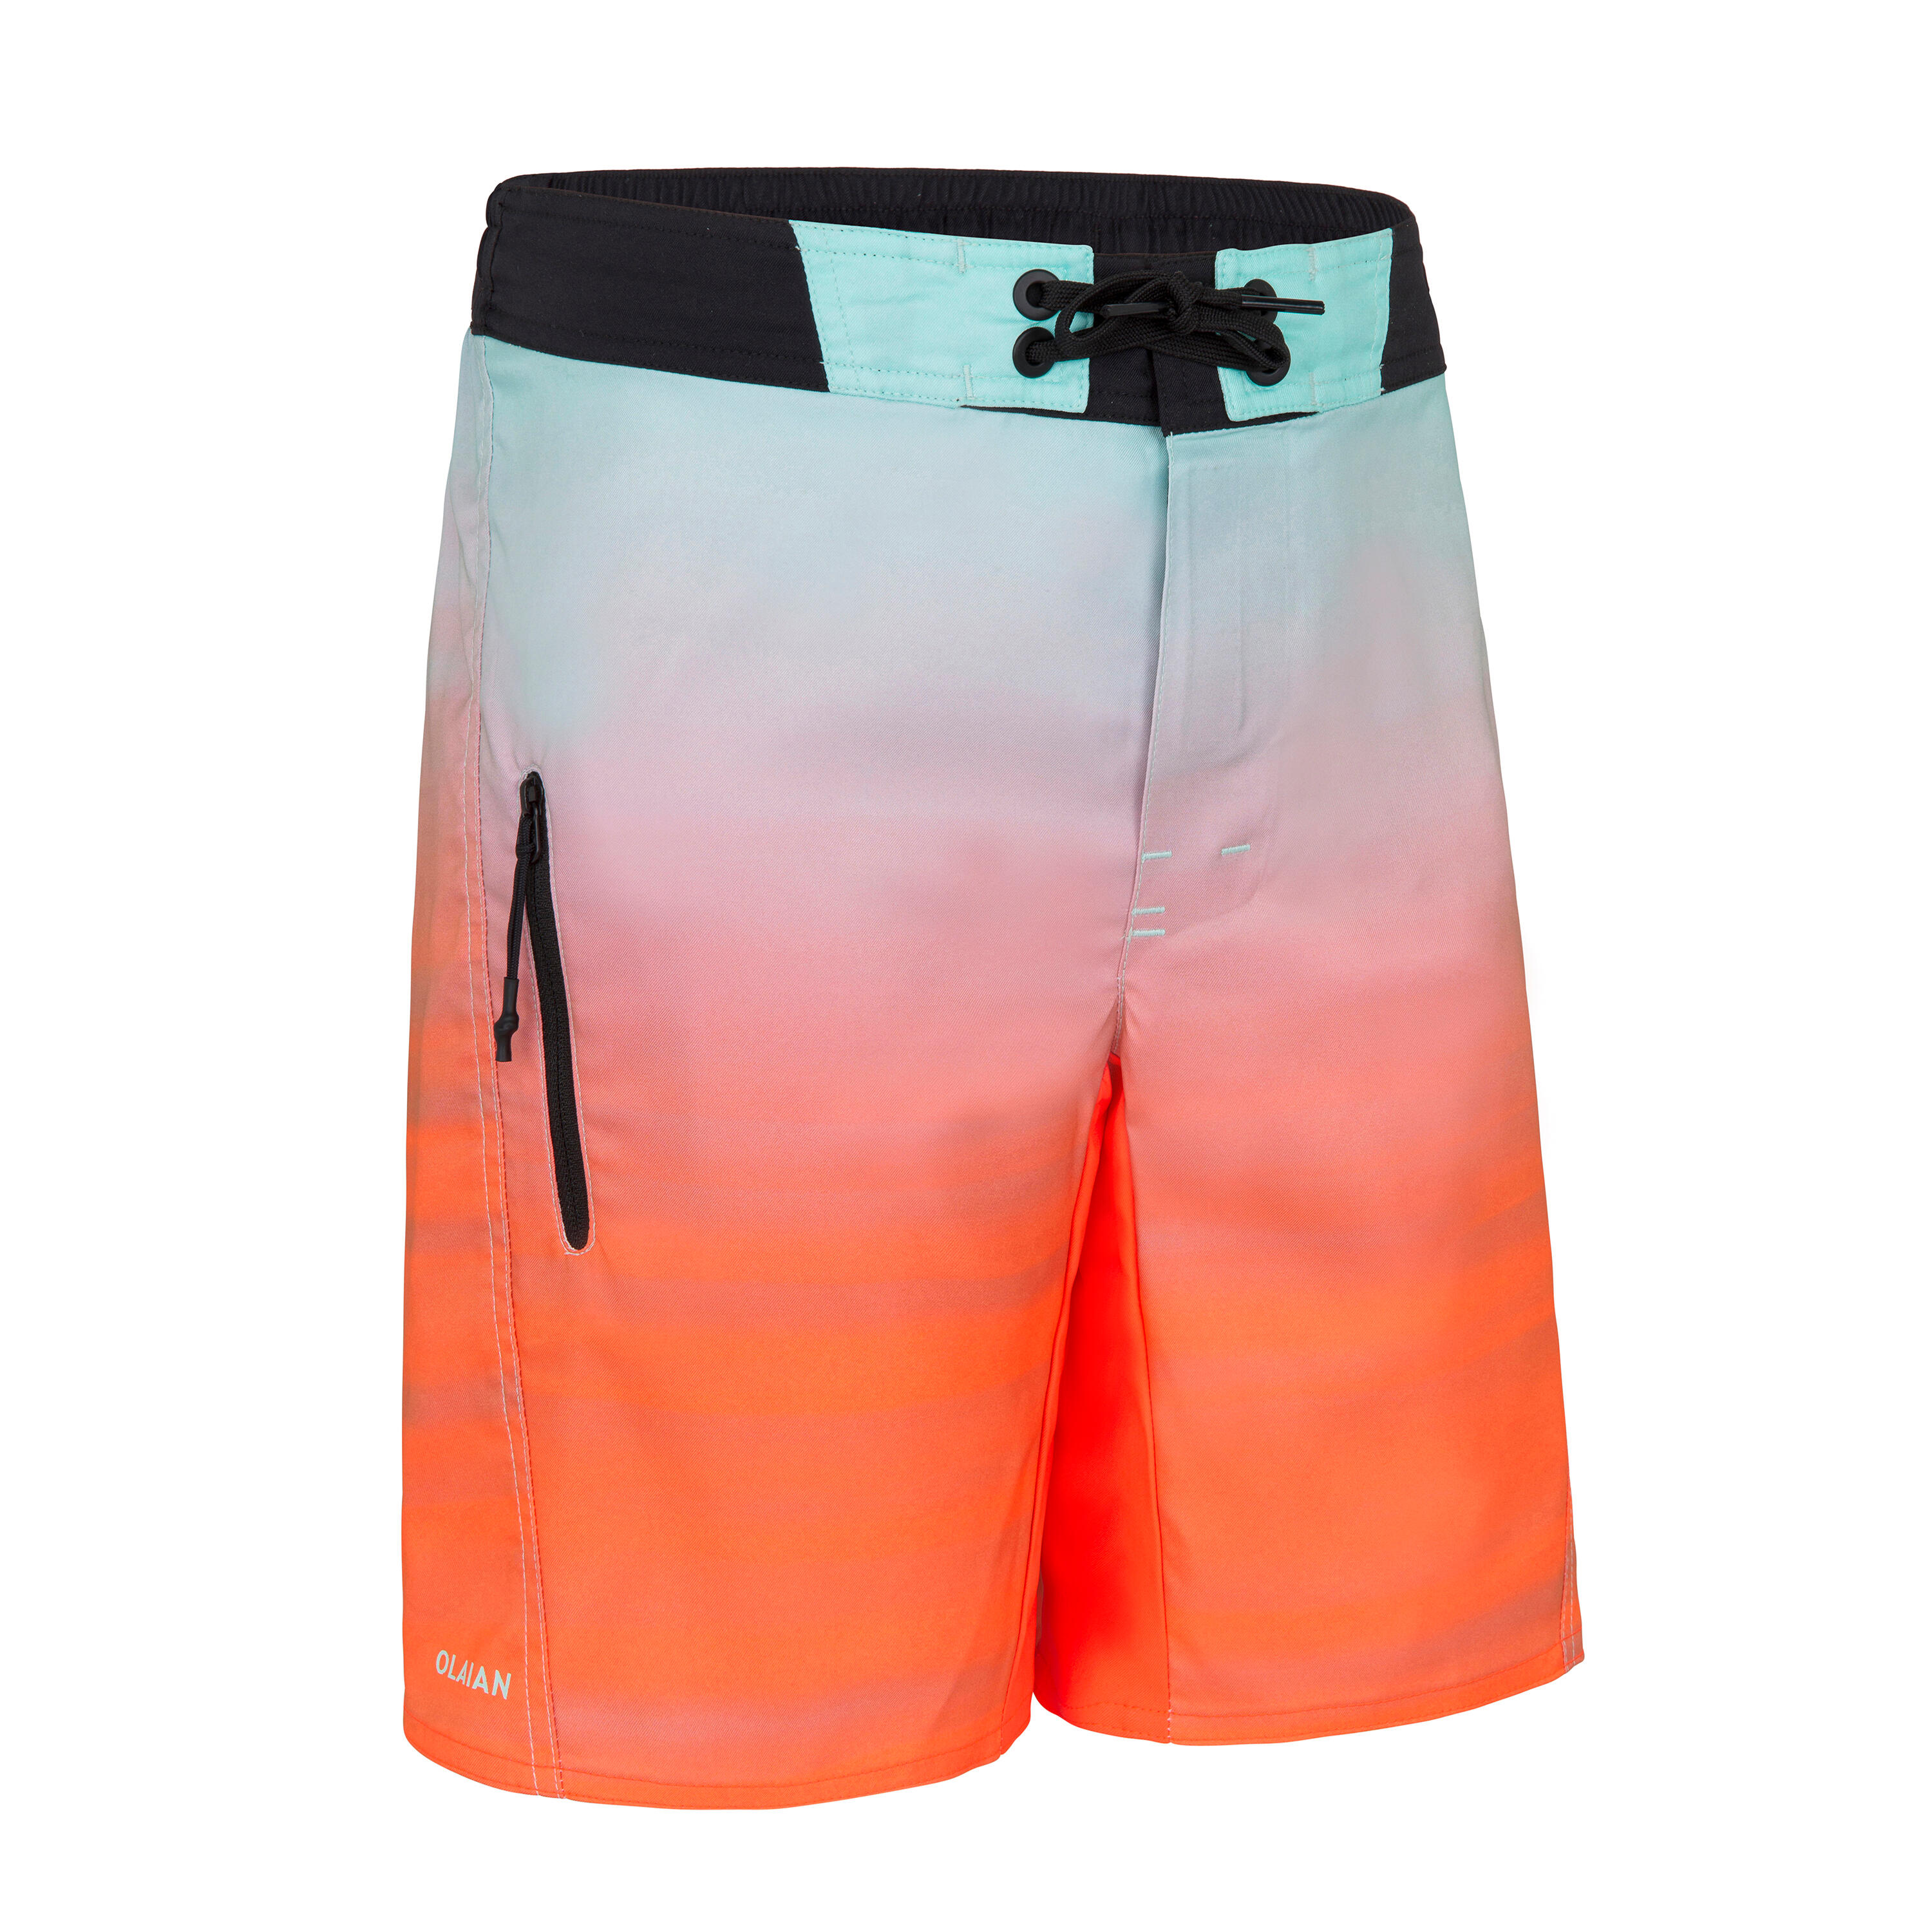 OLAIAN swimming shorts 550 - offshore orange